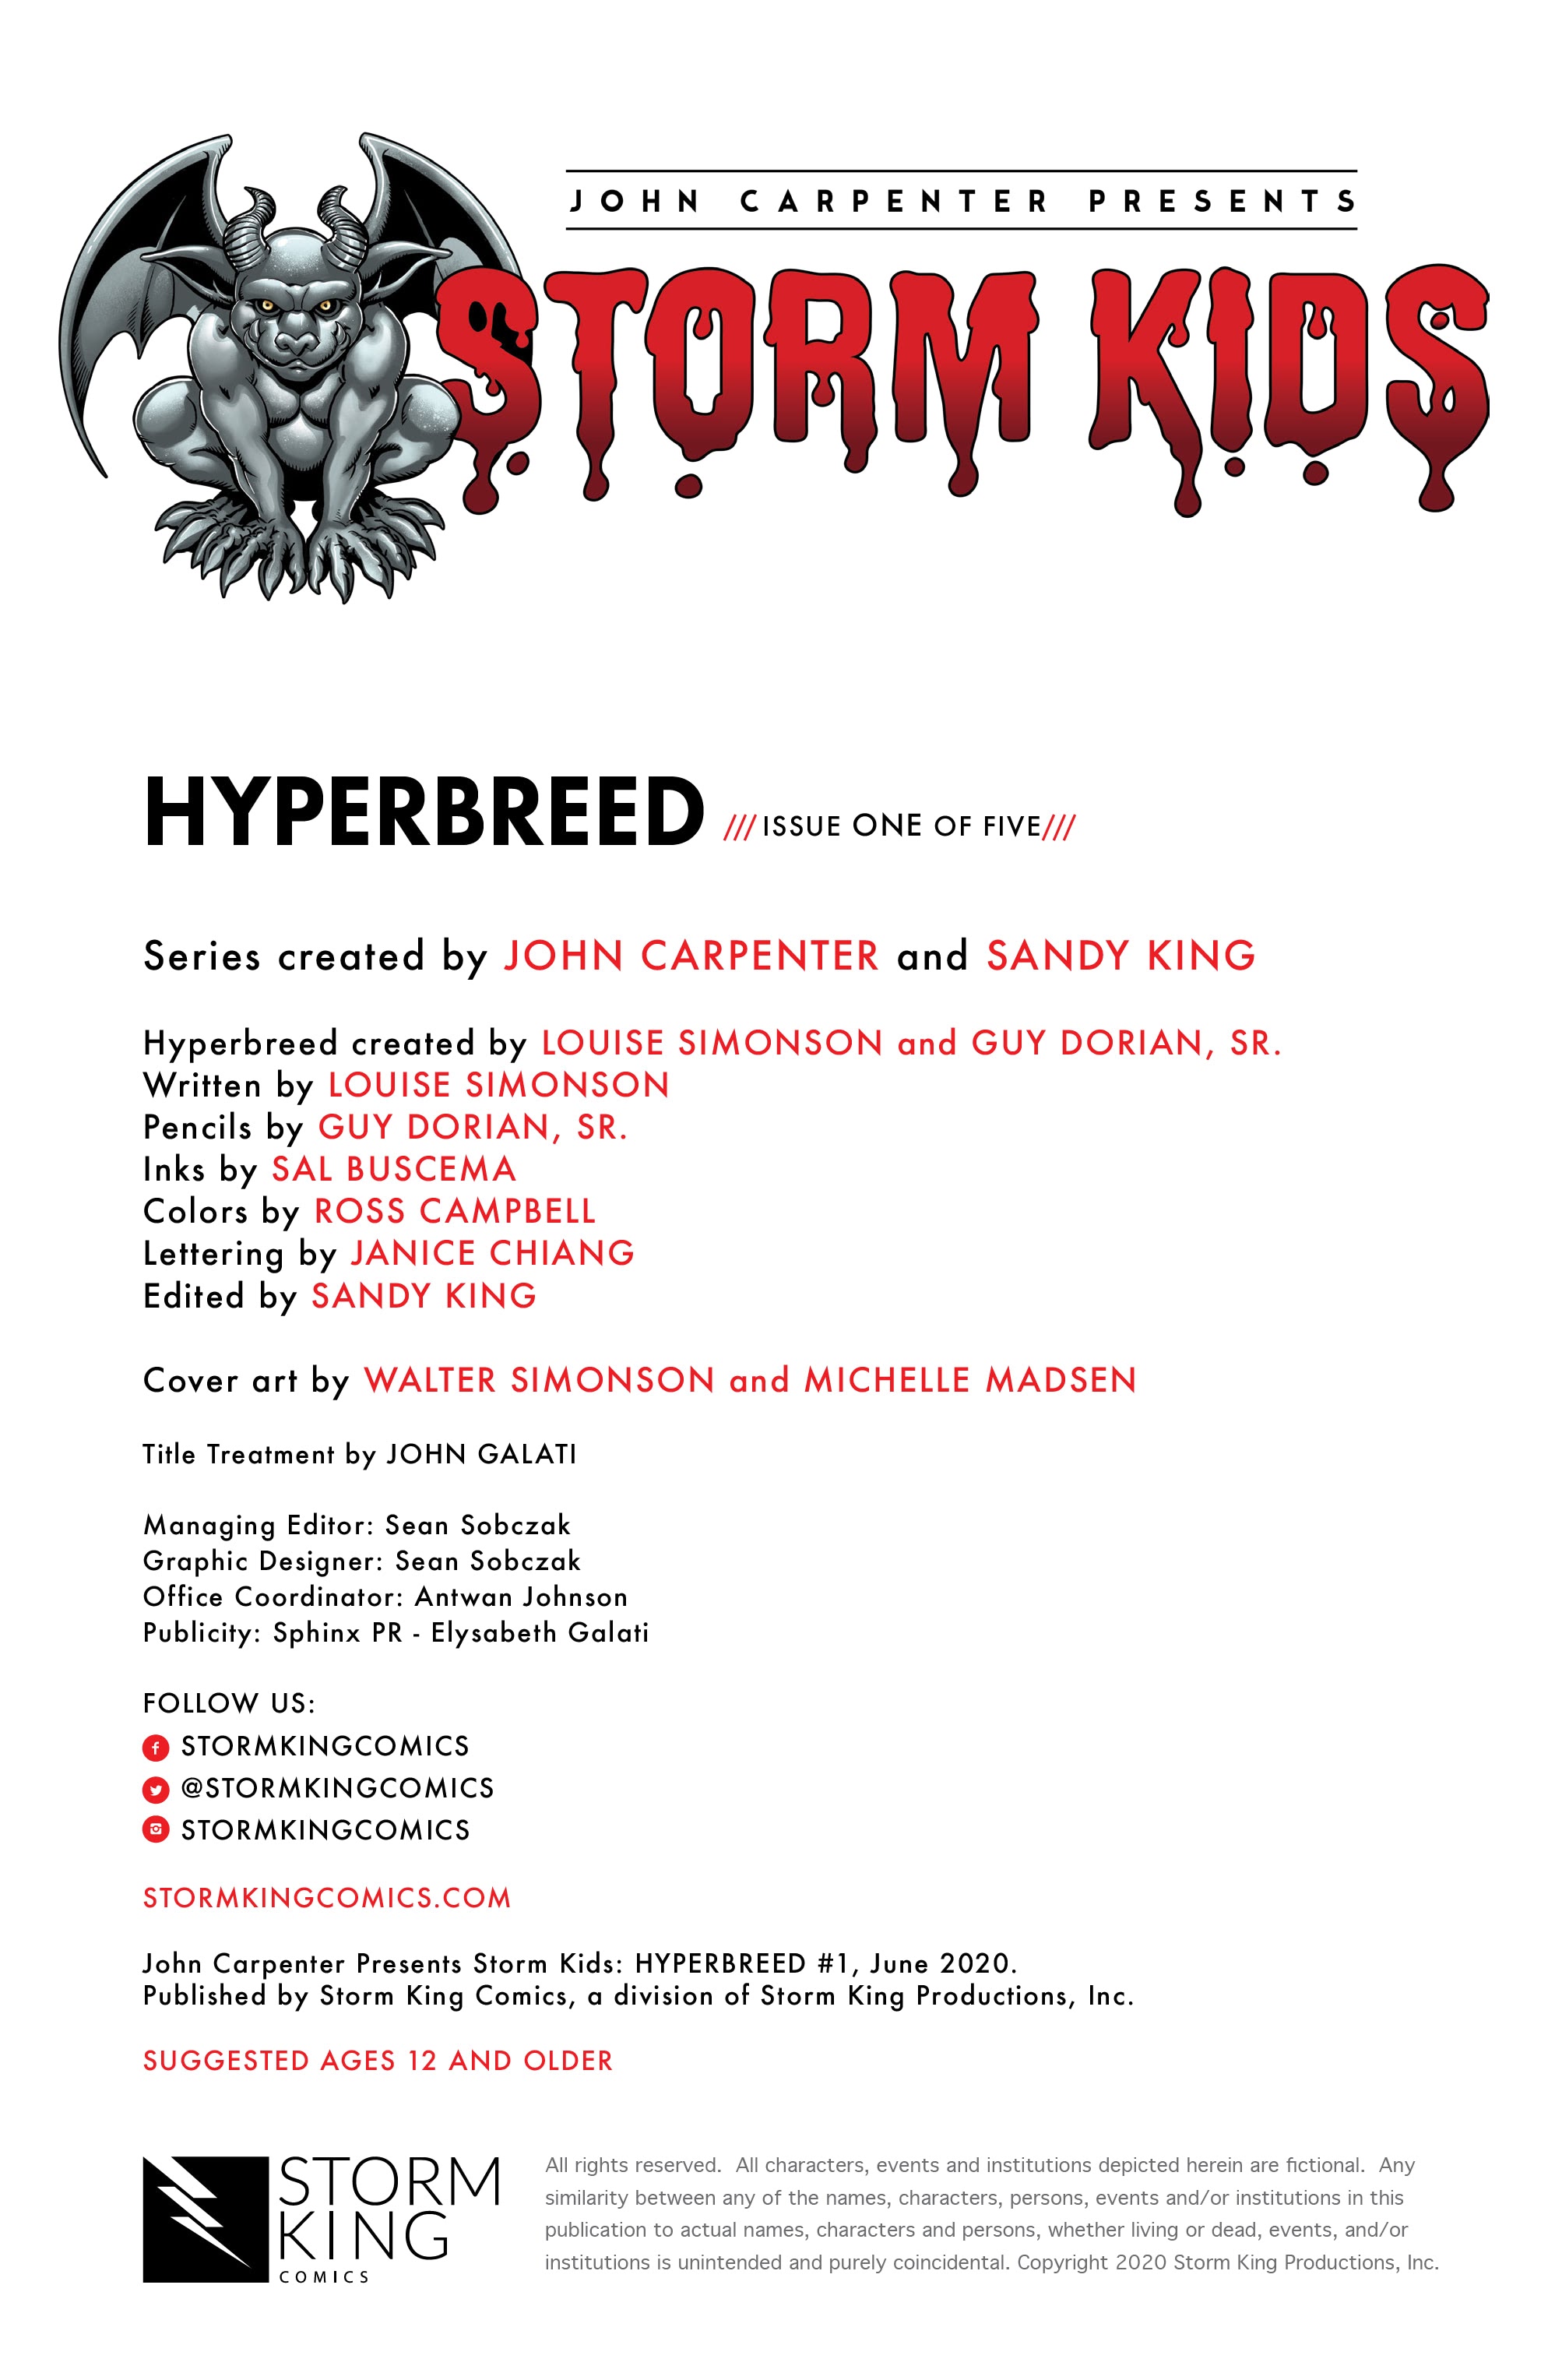 Read online John Carpenter Presents Storm Kids: Hyperbreed comic -  Issue #1 - 2